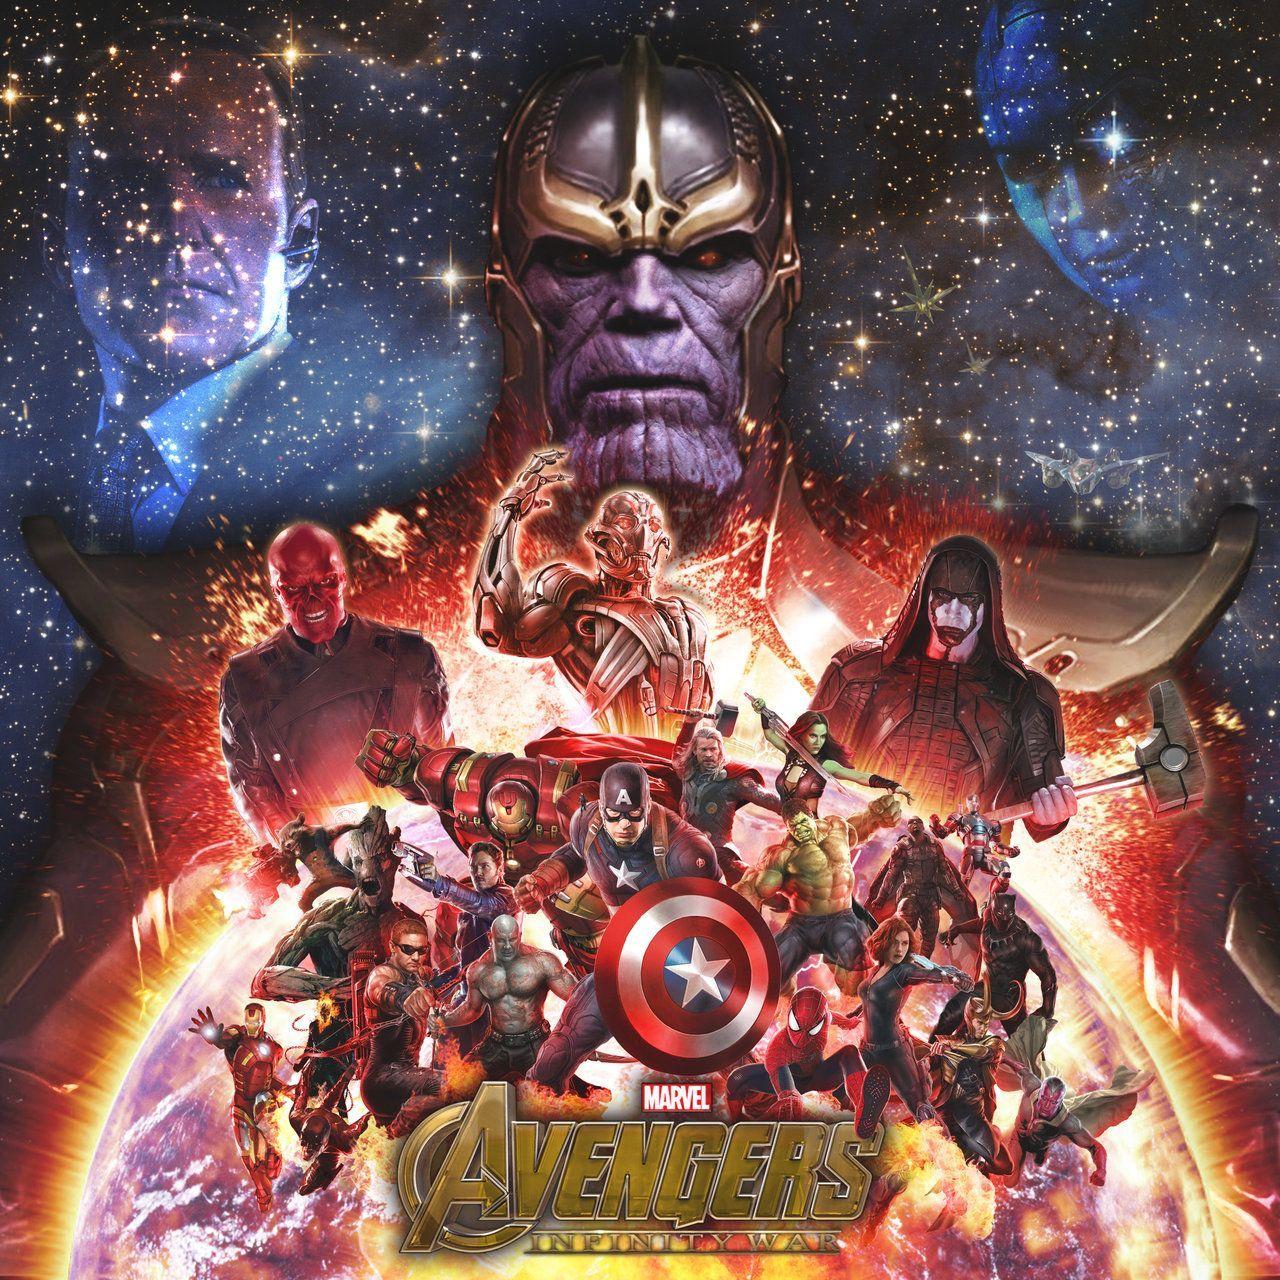 Avengers Infinity War Part and Concept Art